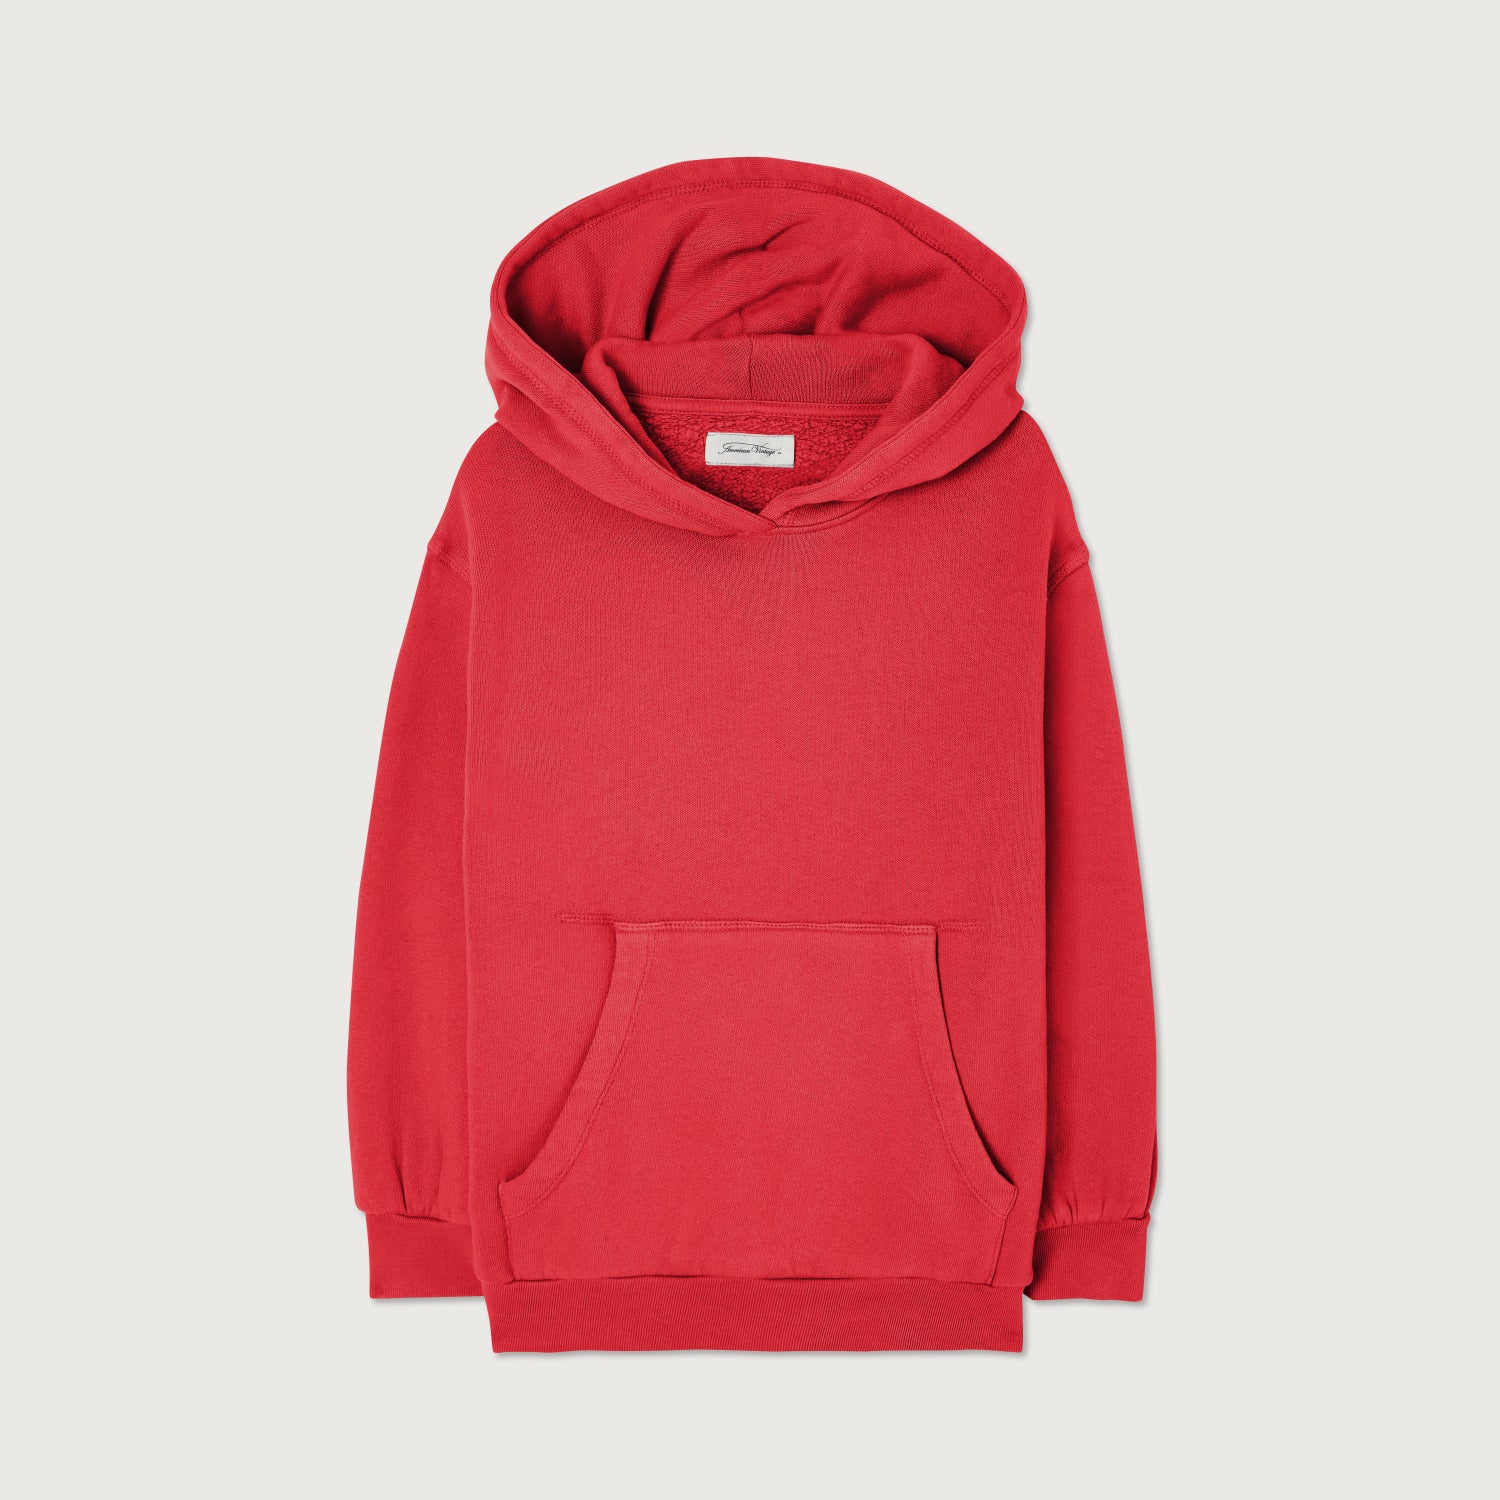 Boys & Girls Red Hooded Sweatshirt